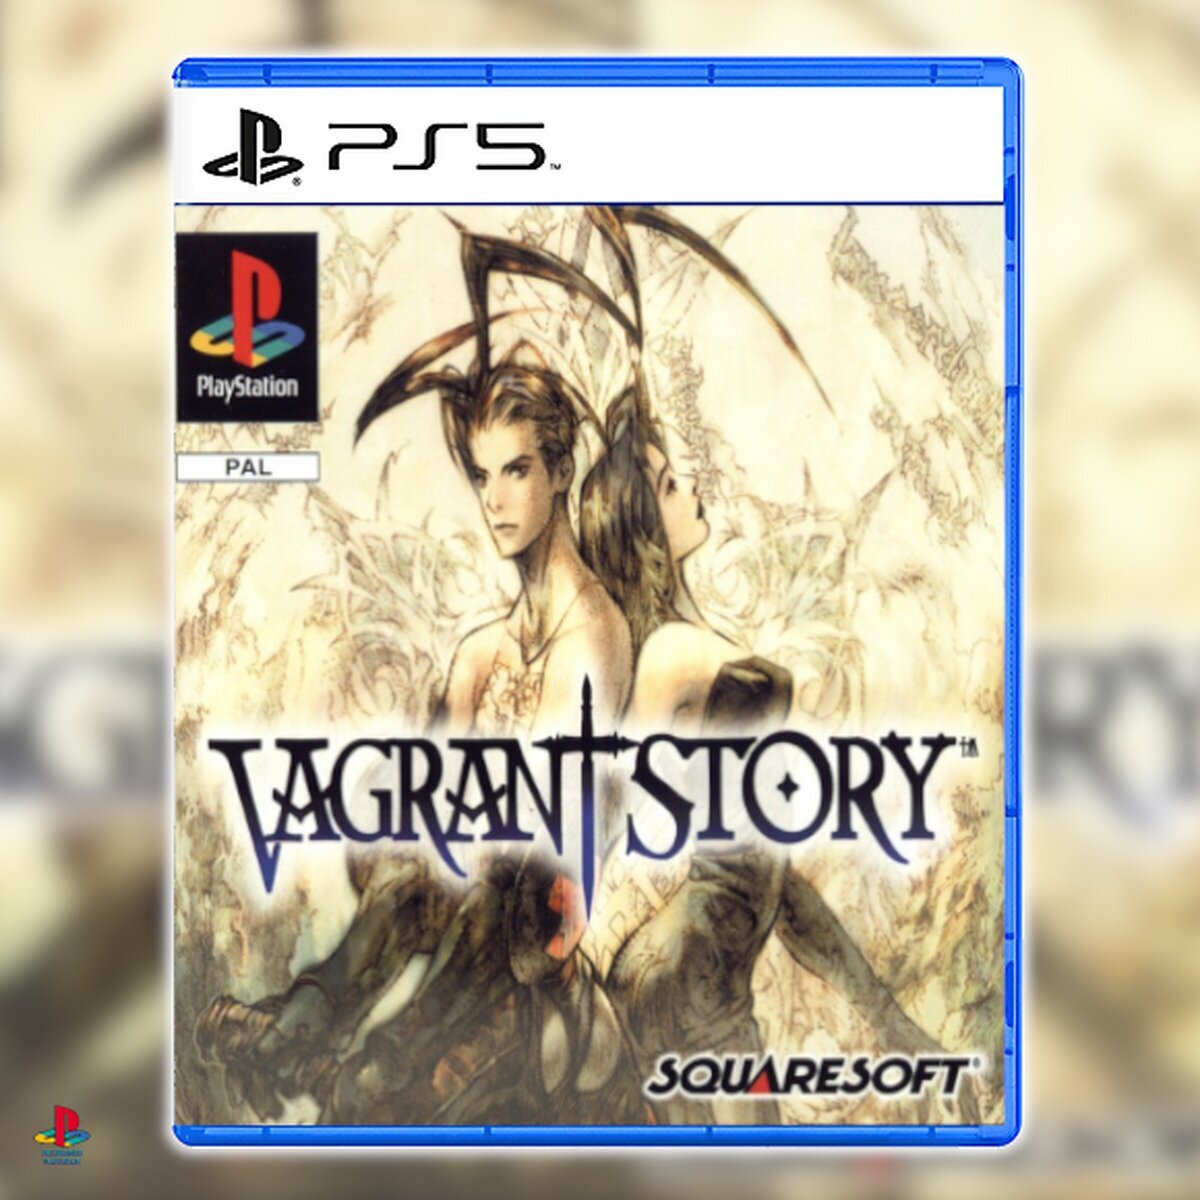 ¿Os gustaría volver a ver Vagrant Story en consolas actuales?